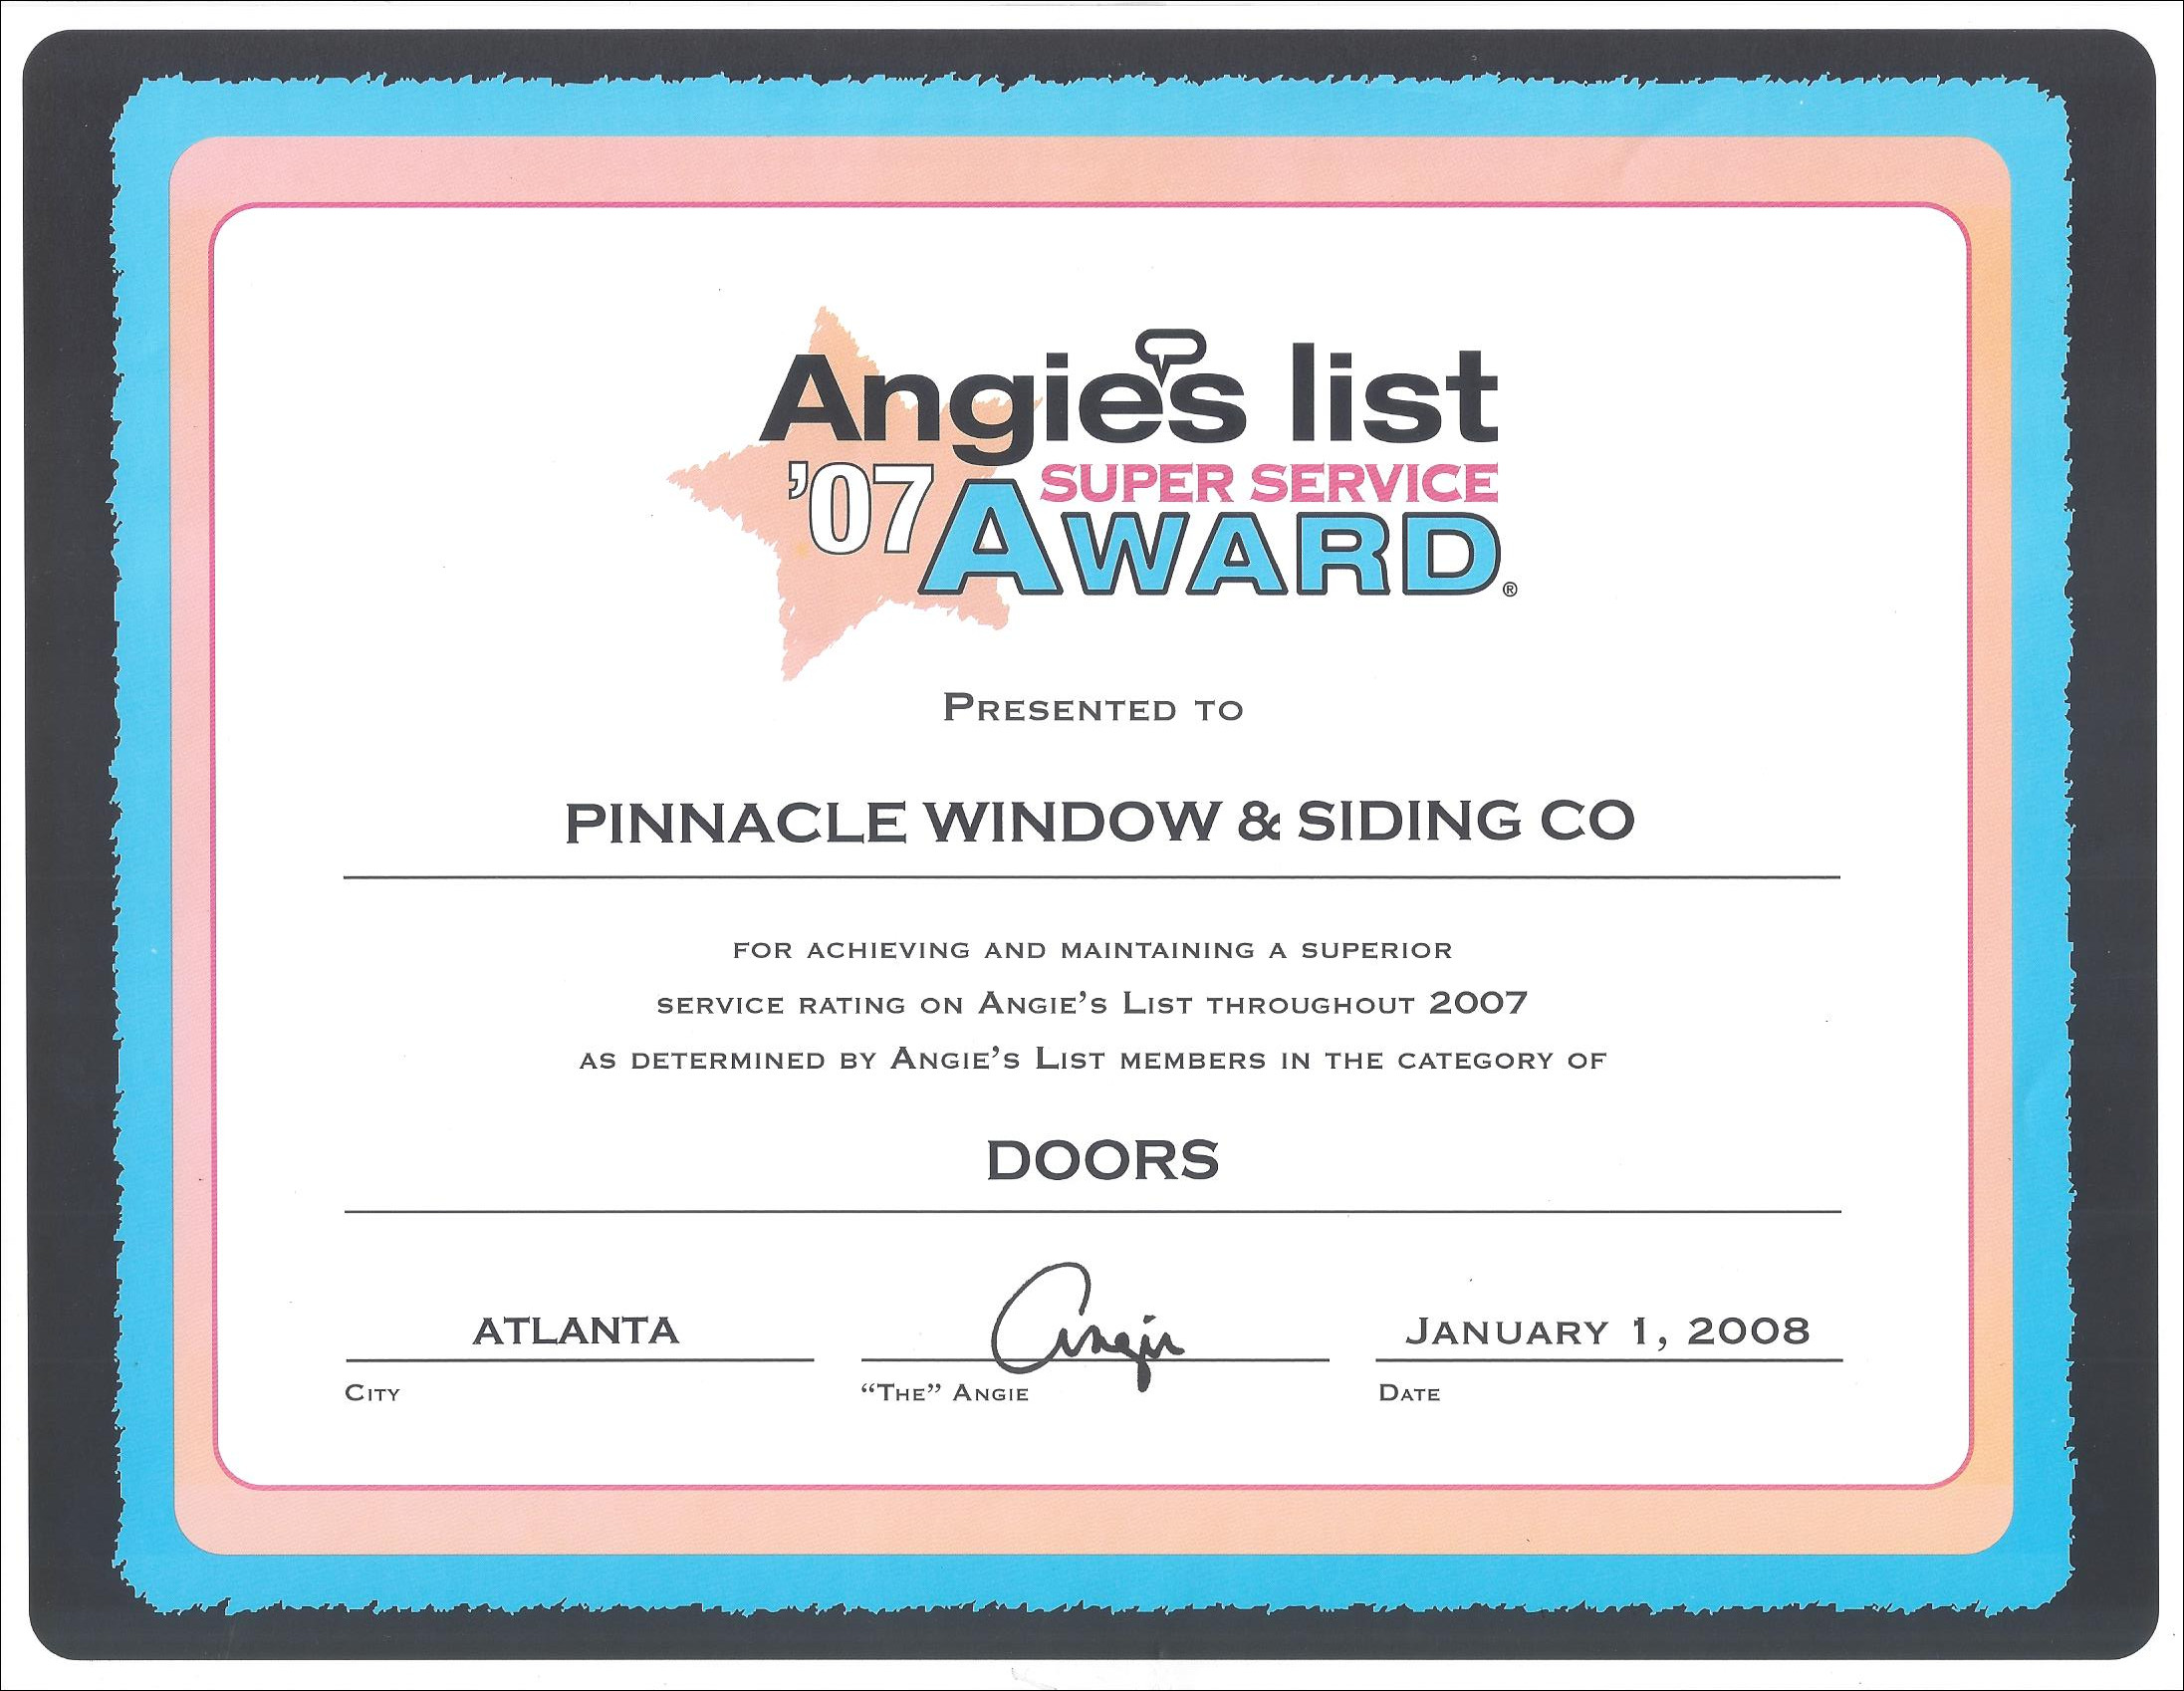 Angie's List doors award 2007